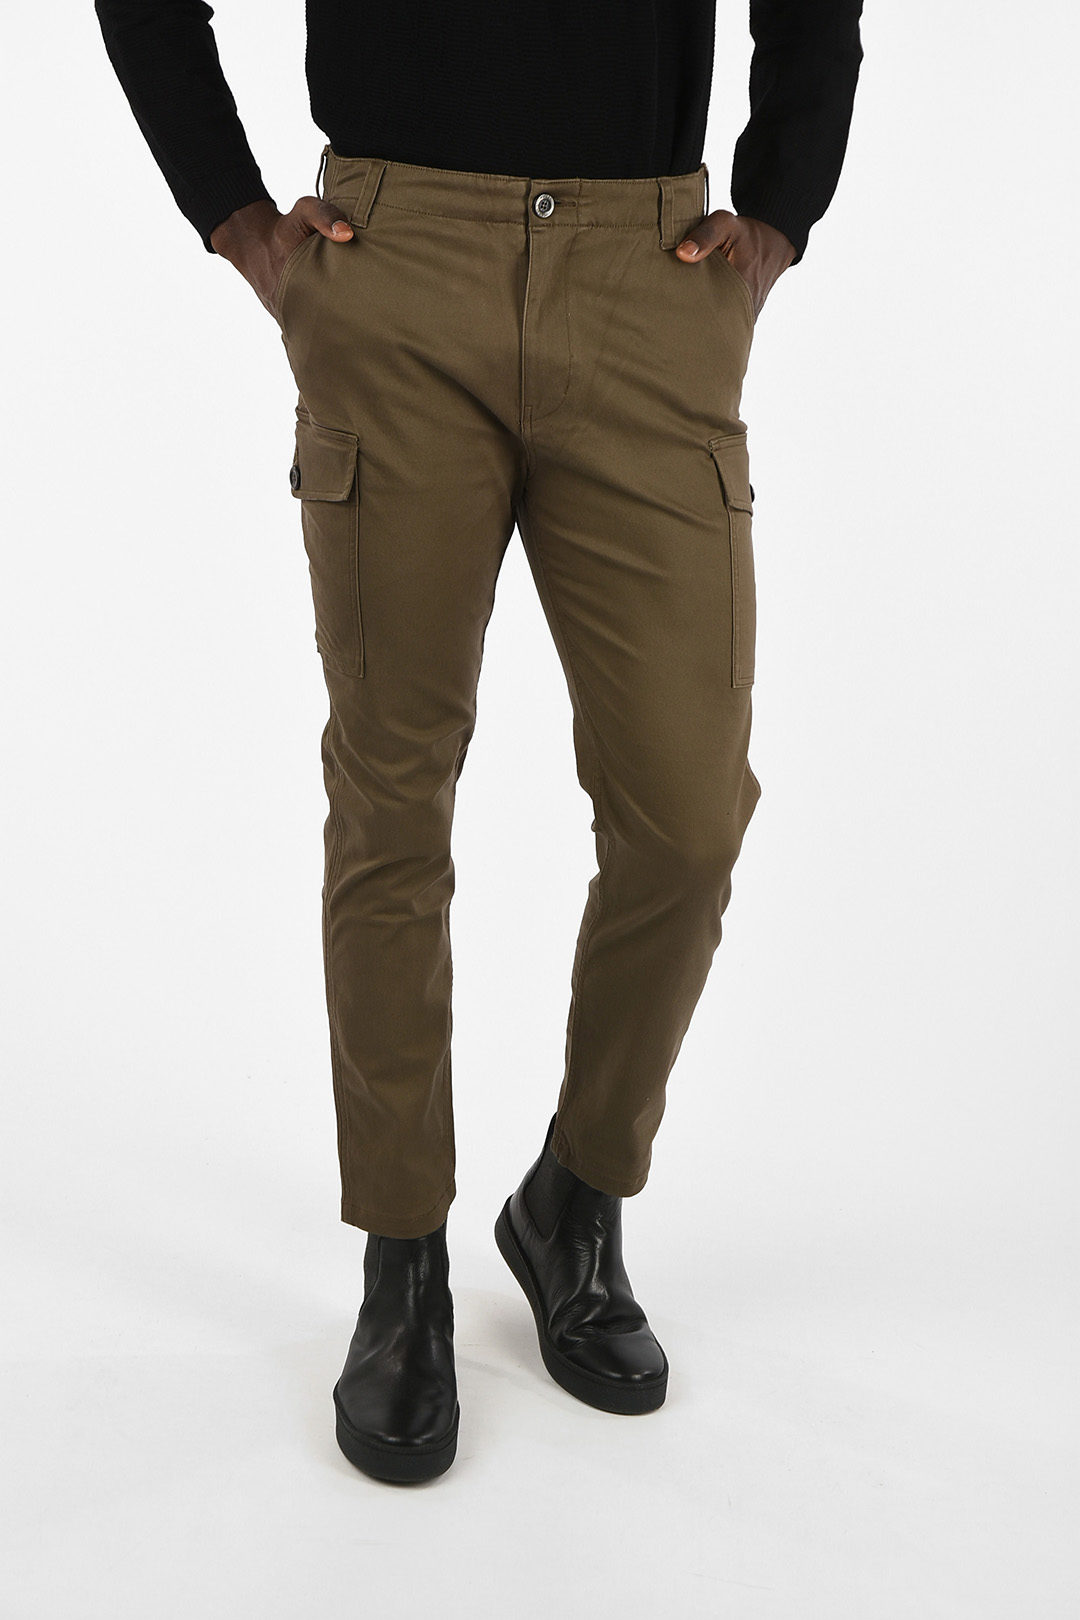 Armani ARMANI EXCHANGE double pleat cargo pants men - Glamood Outlet